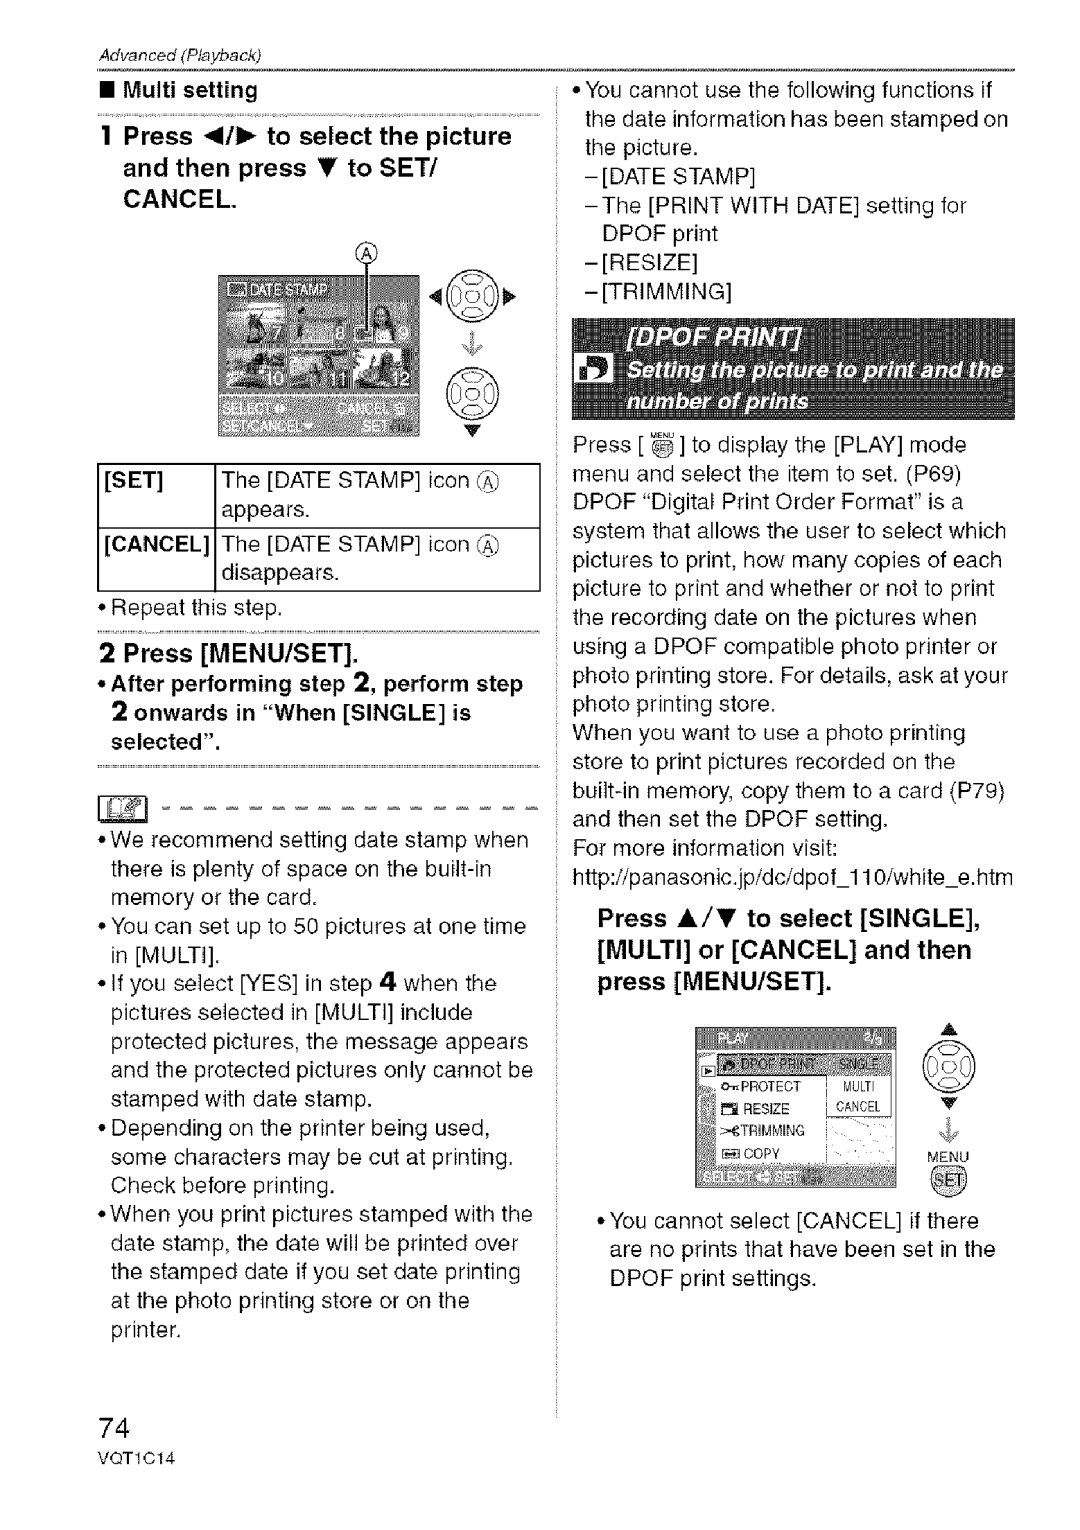 Panasonic DMC-FX12, DMC-FX10 operating instructions Resize Trimming, Multi or Cancel and then Press MENU/SET 